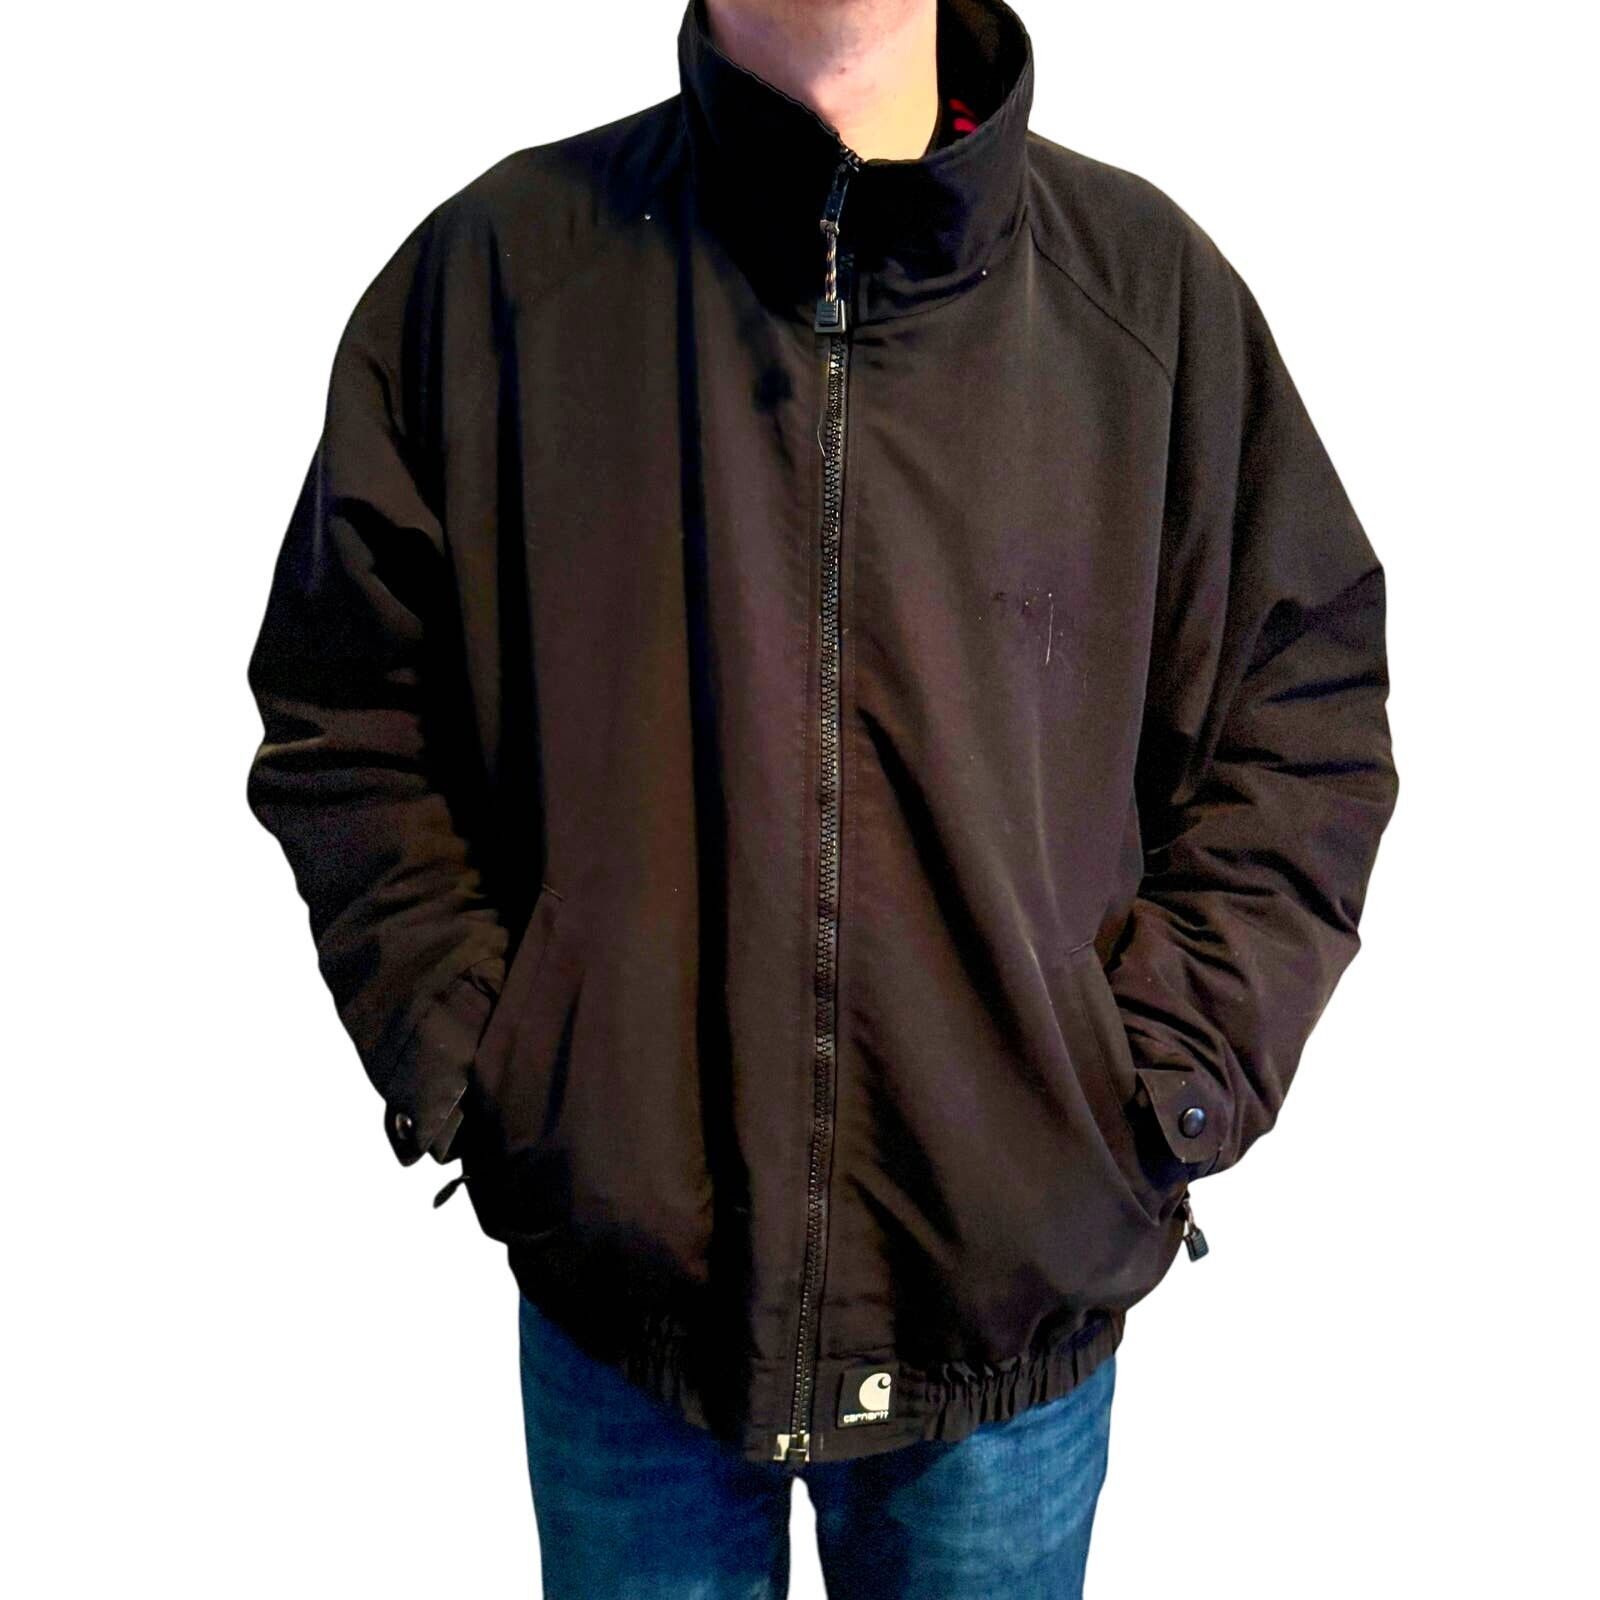 Carhartt Vintage Carhartt Workshield Jacket Fleece Lined Black J72 Size US XL / EU 56 / 4 - 1 Preview